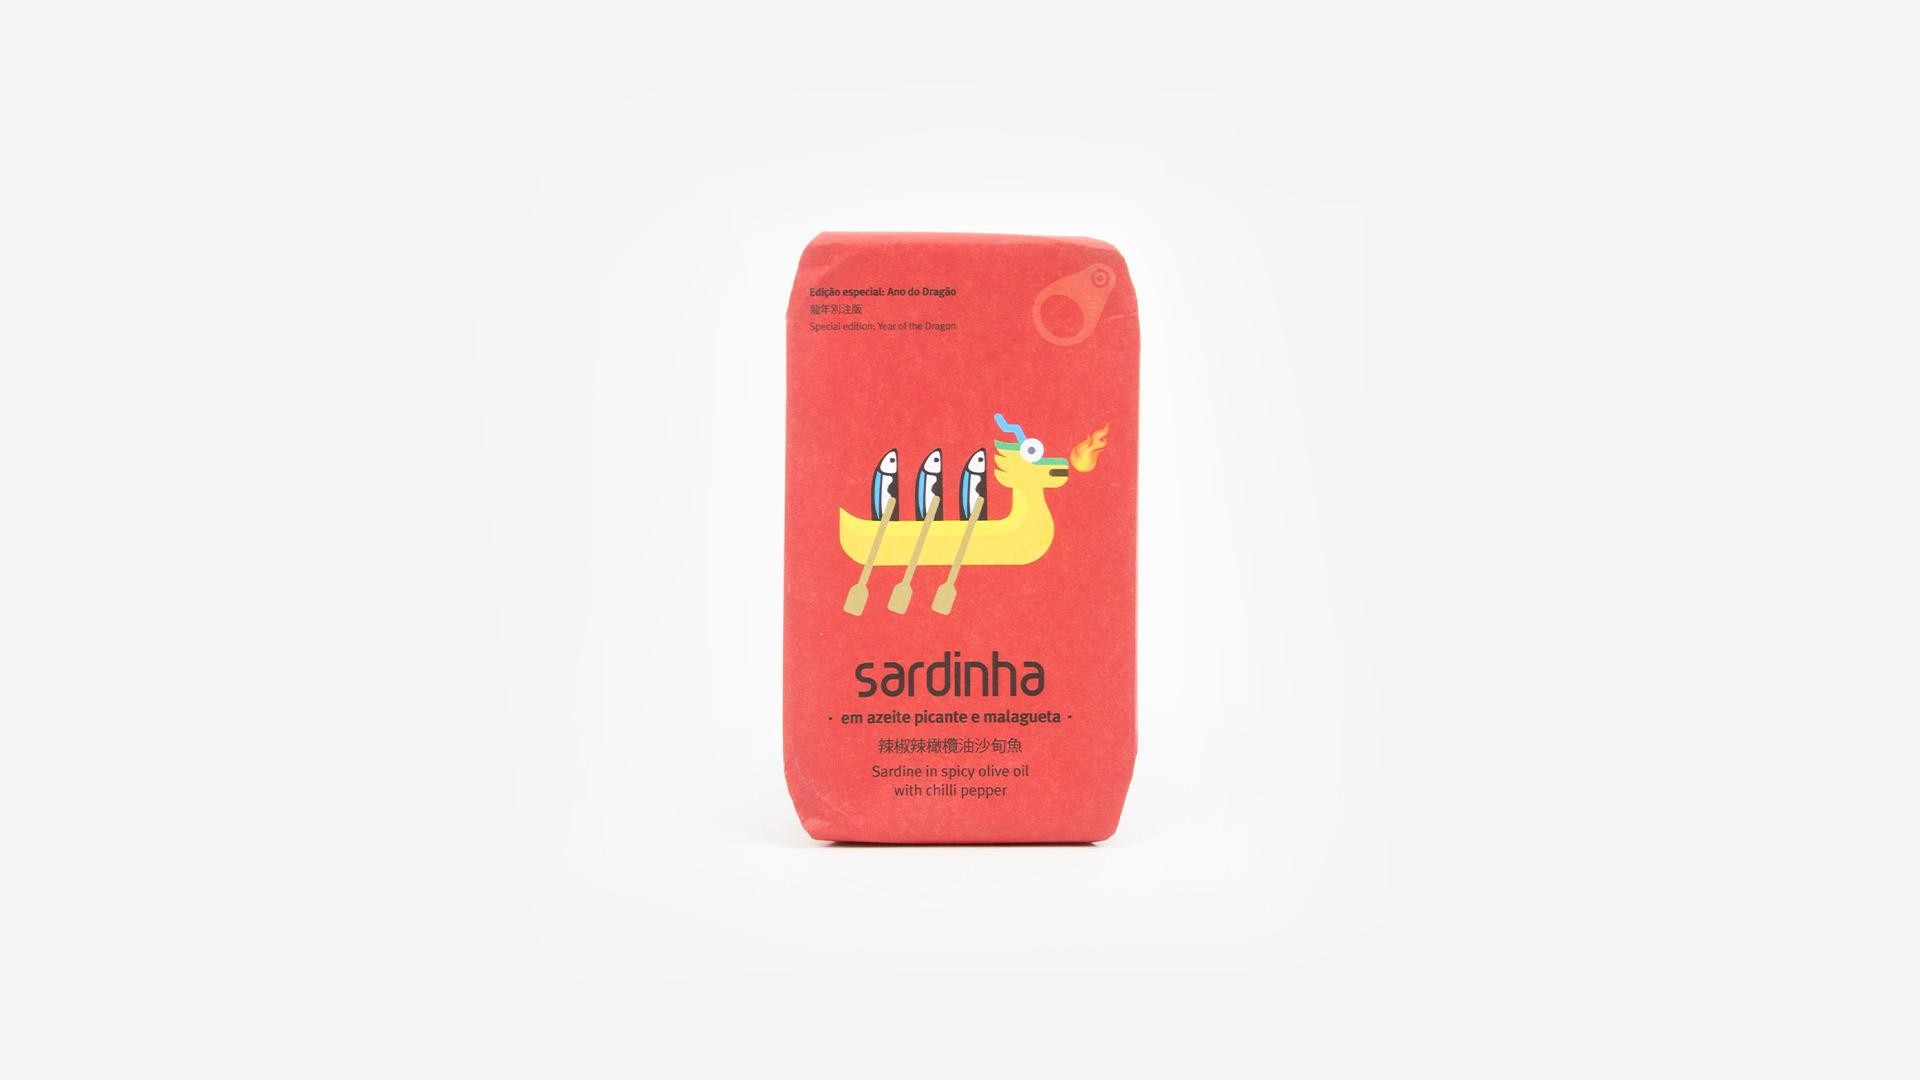 Sardinha Year of the Dragon Spicy Olive Oil Sardines